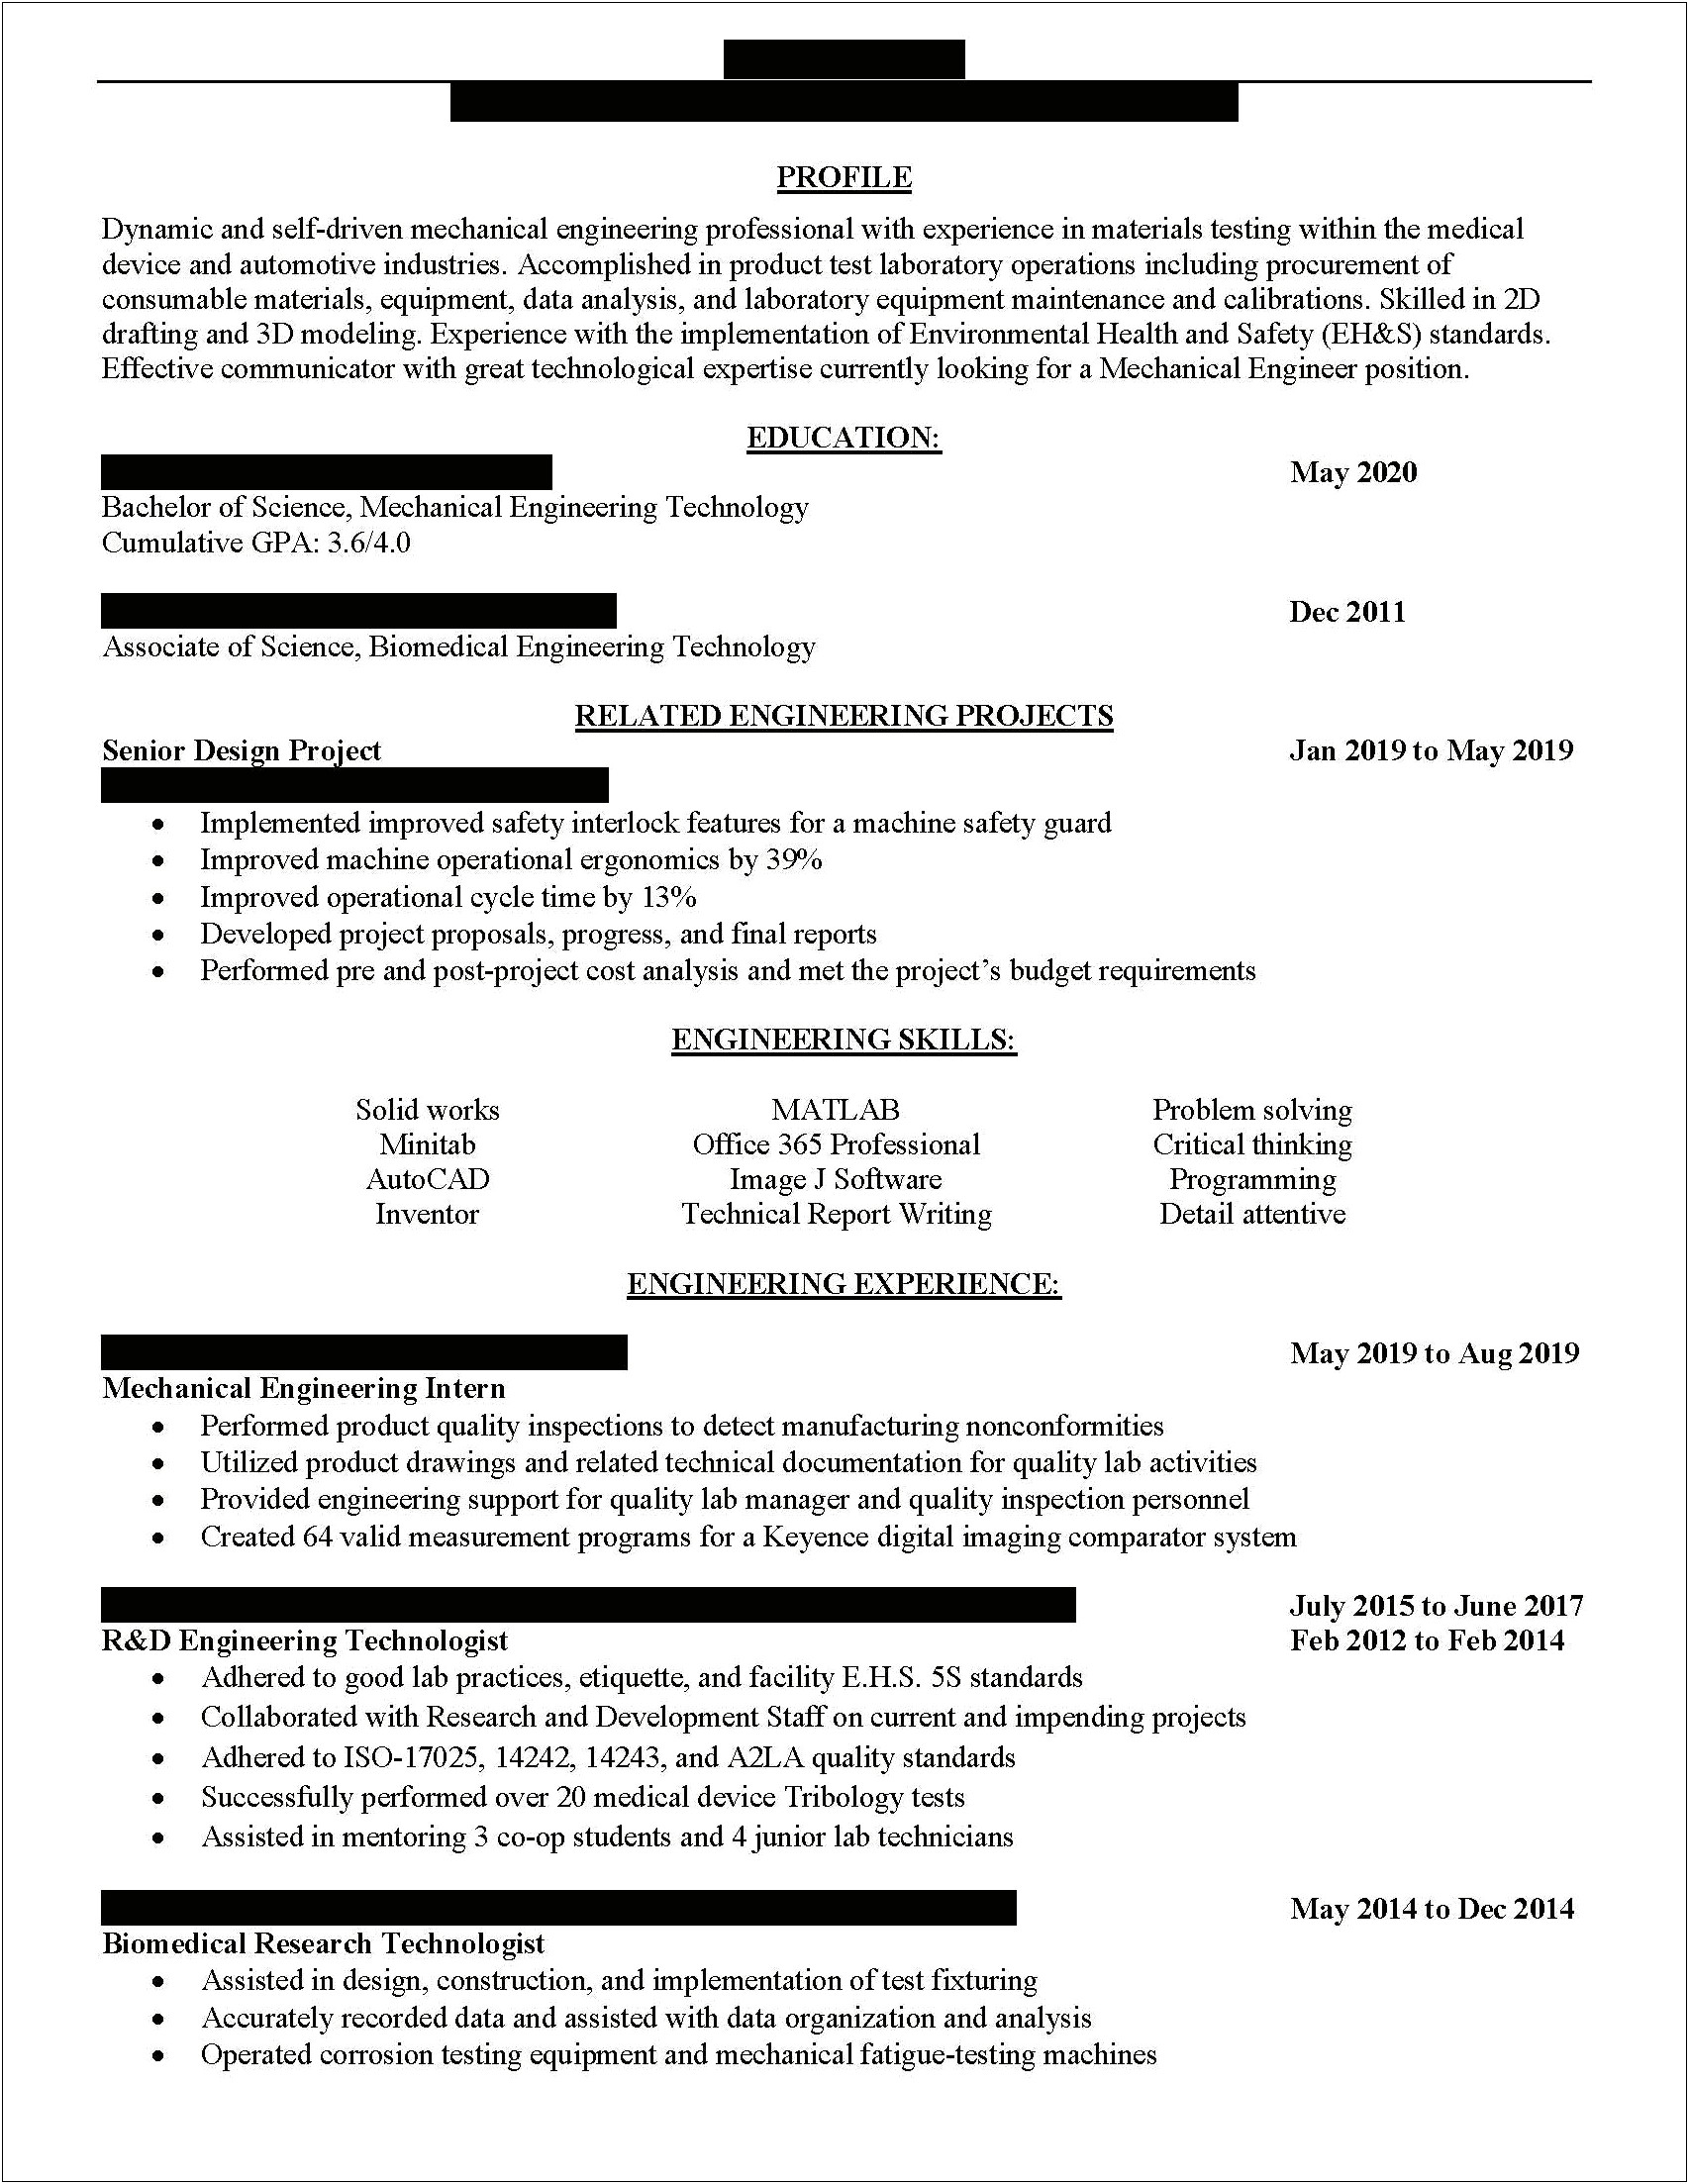 Engineering Skills Section Of Resume